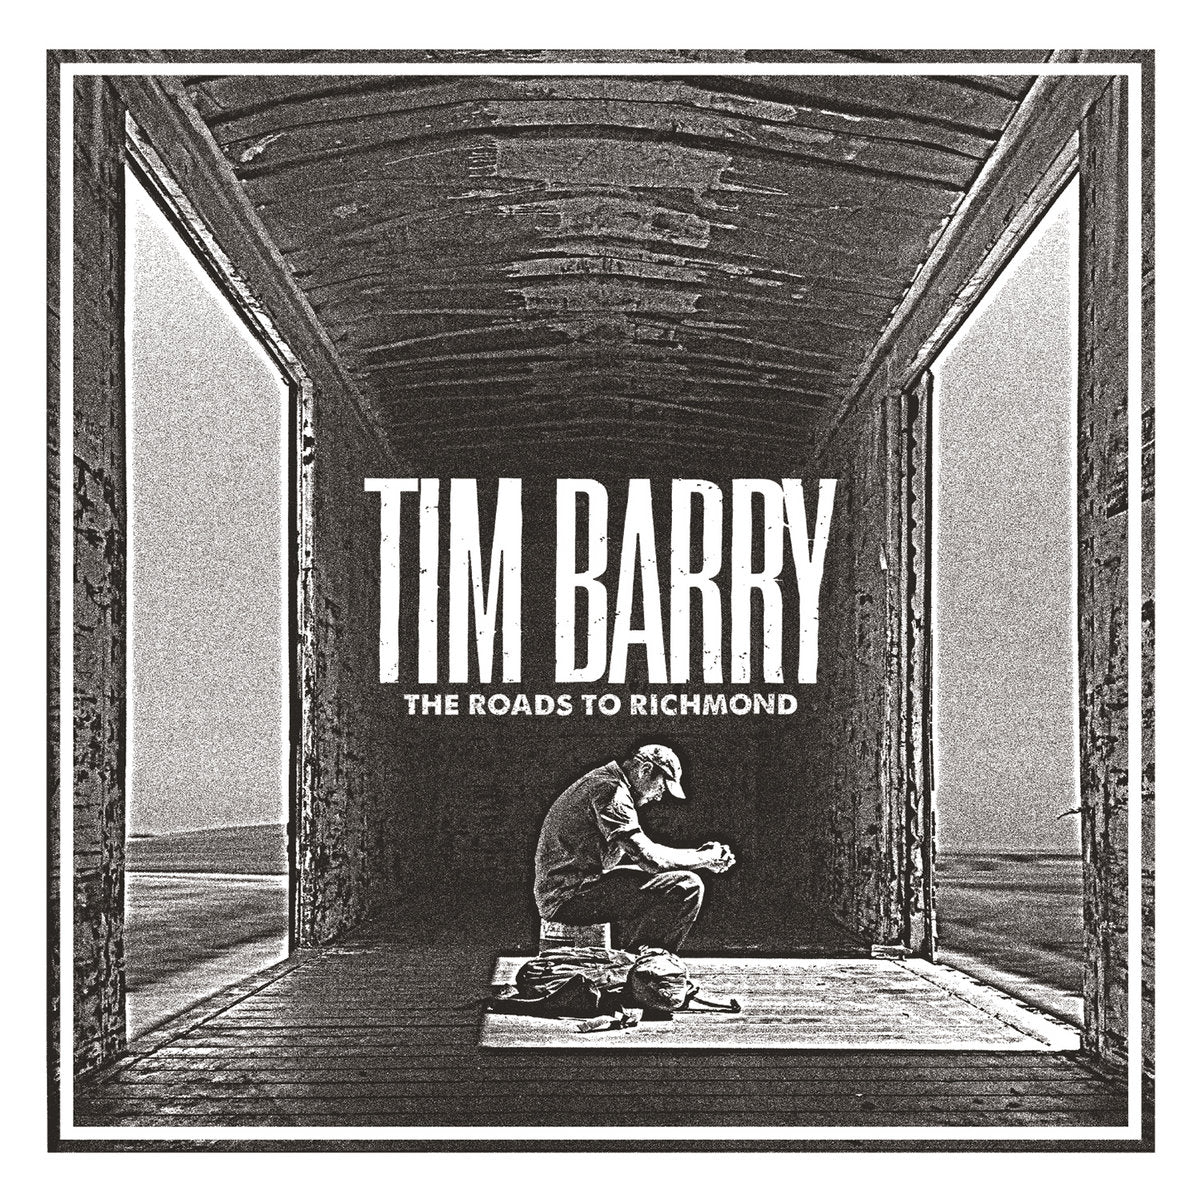 Tim Barry "The Roads to Richmond" LP/CD